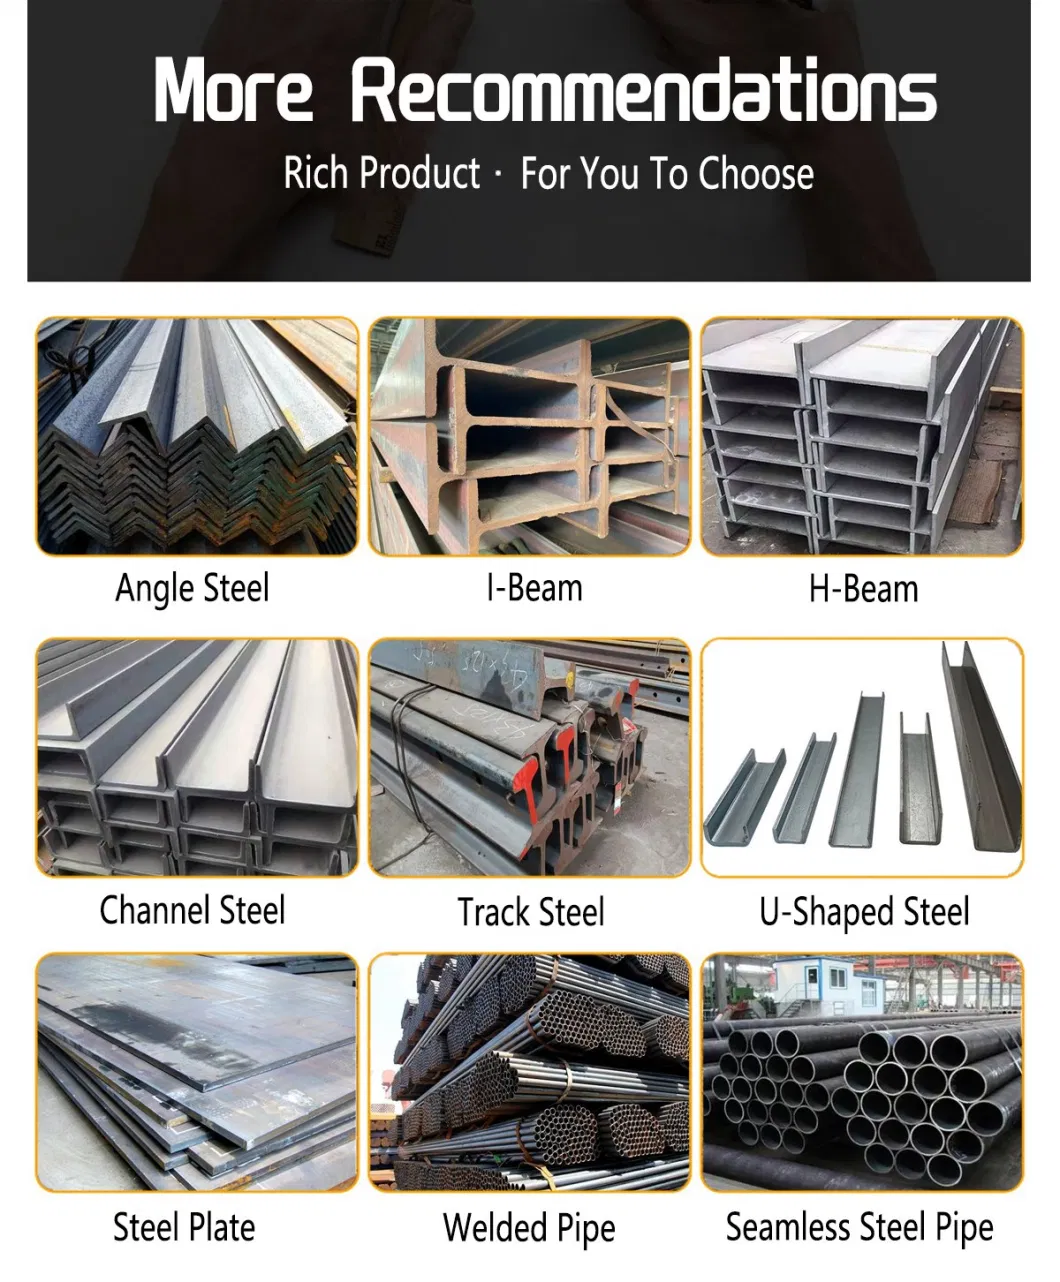 AISI Carbon Alloy Steel Round Bars S45c 1045 S20c 1020